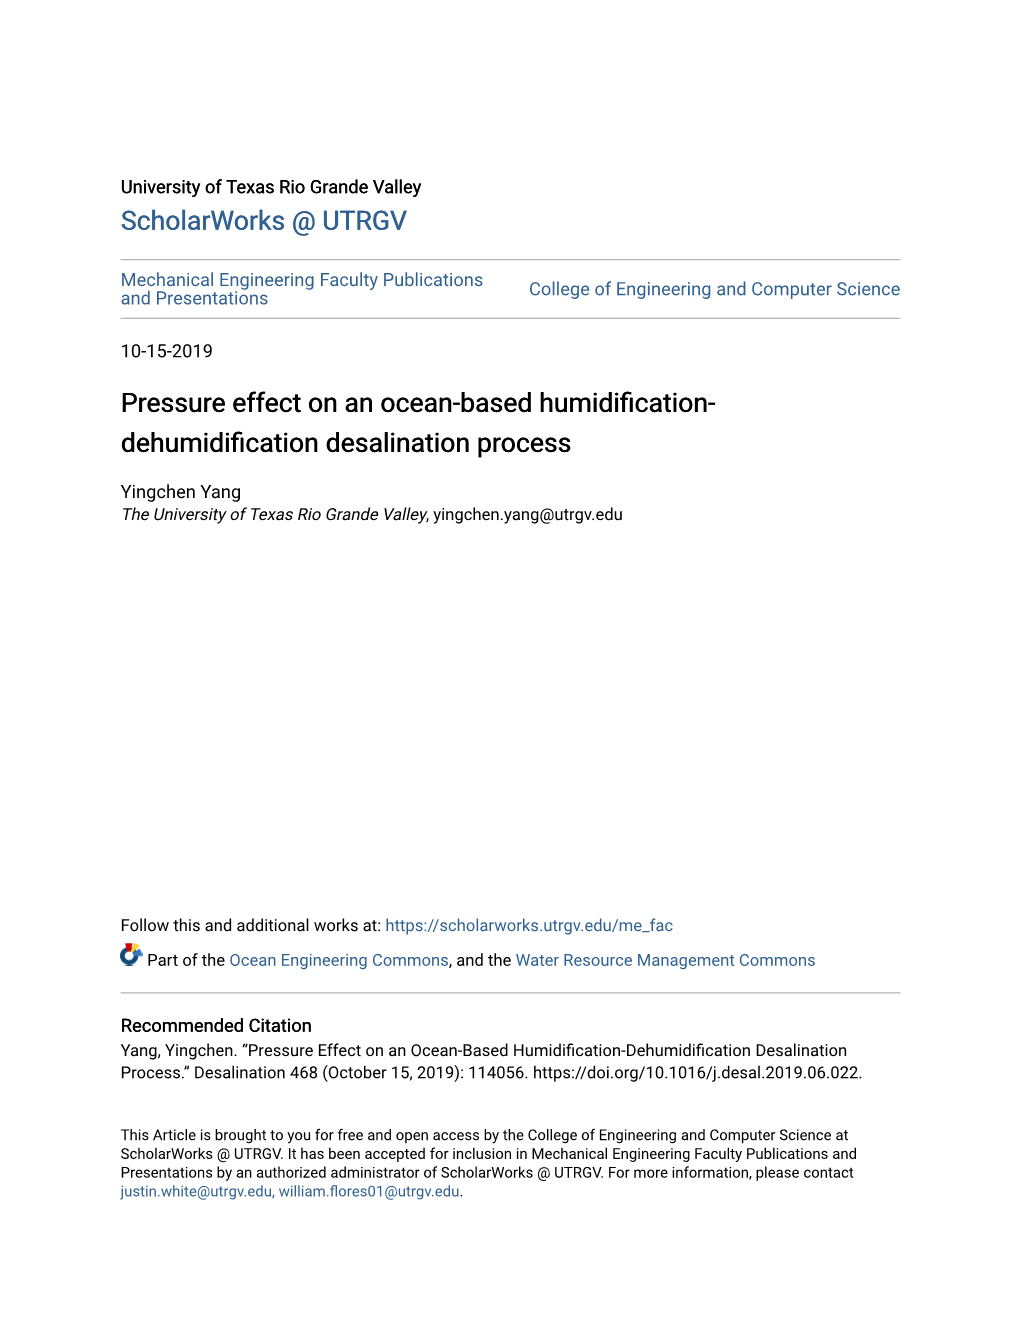 Pressure Effect on an Ocean-Based Humidification-Dehumidification Desalination Process.” Desalination 468 (October 15, 2019): 114056